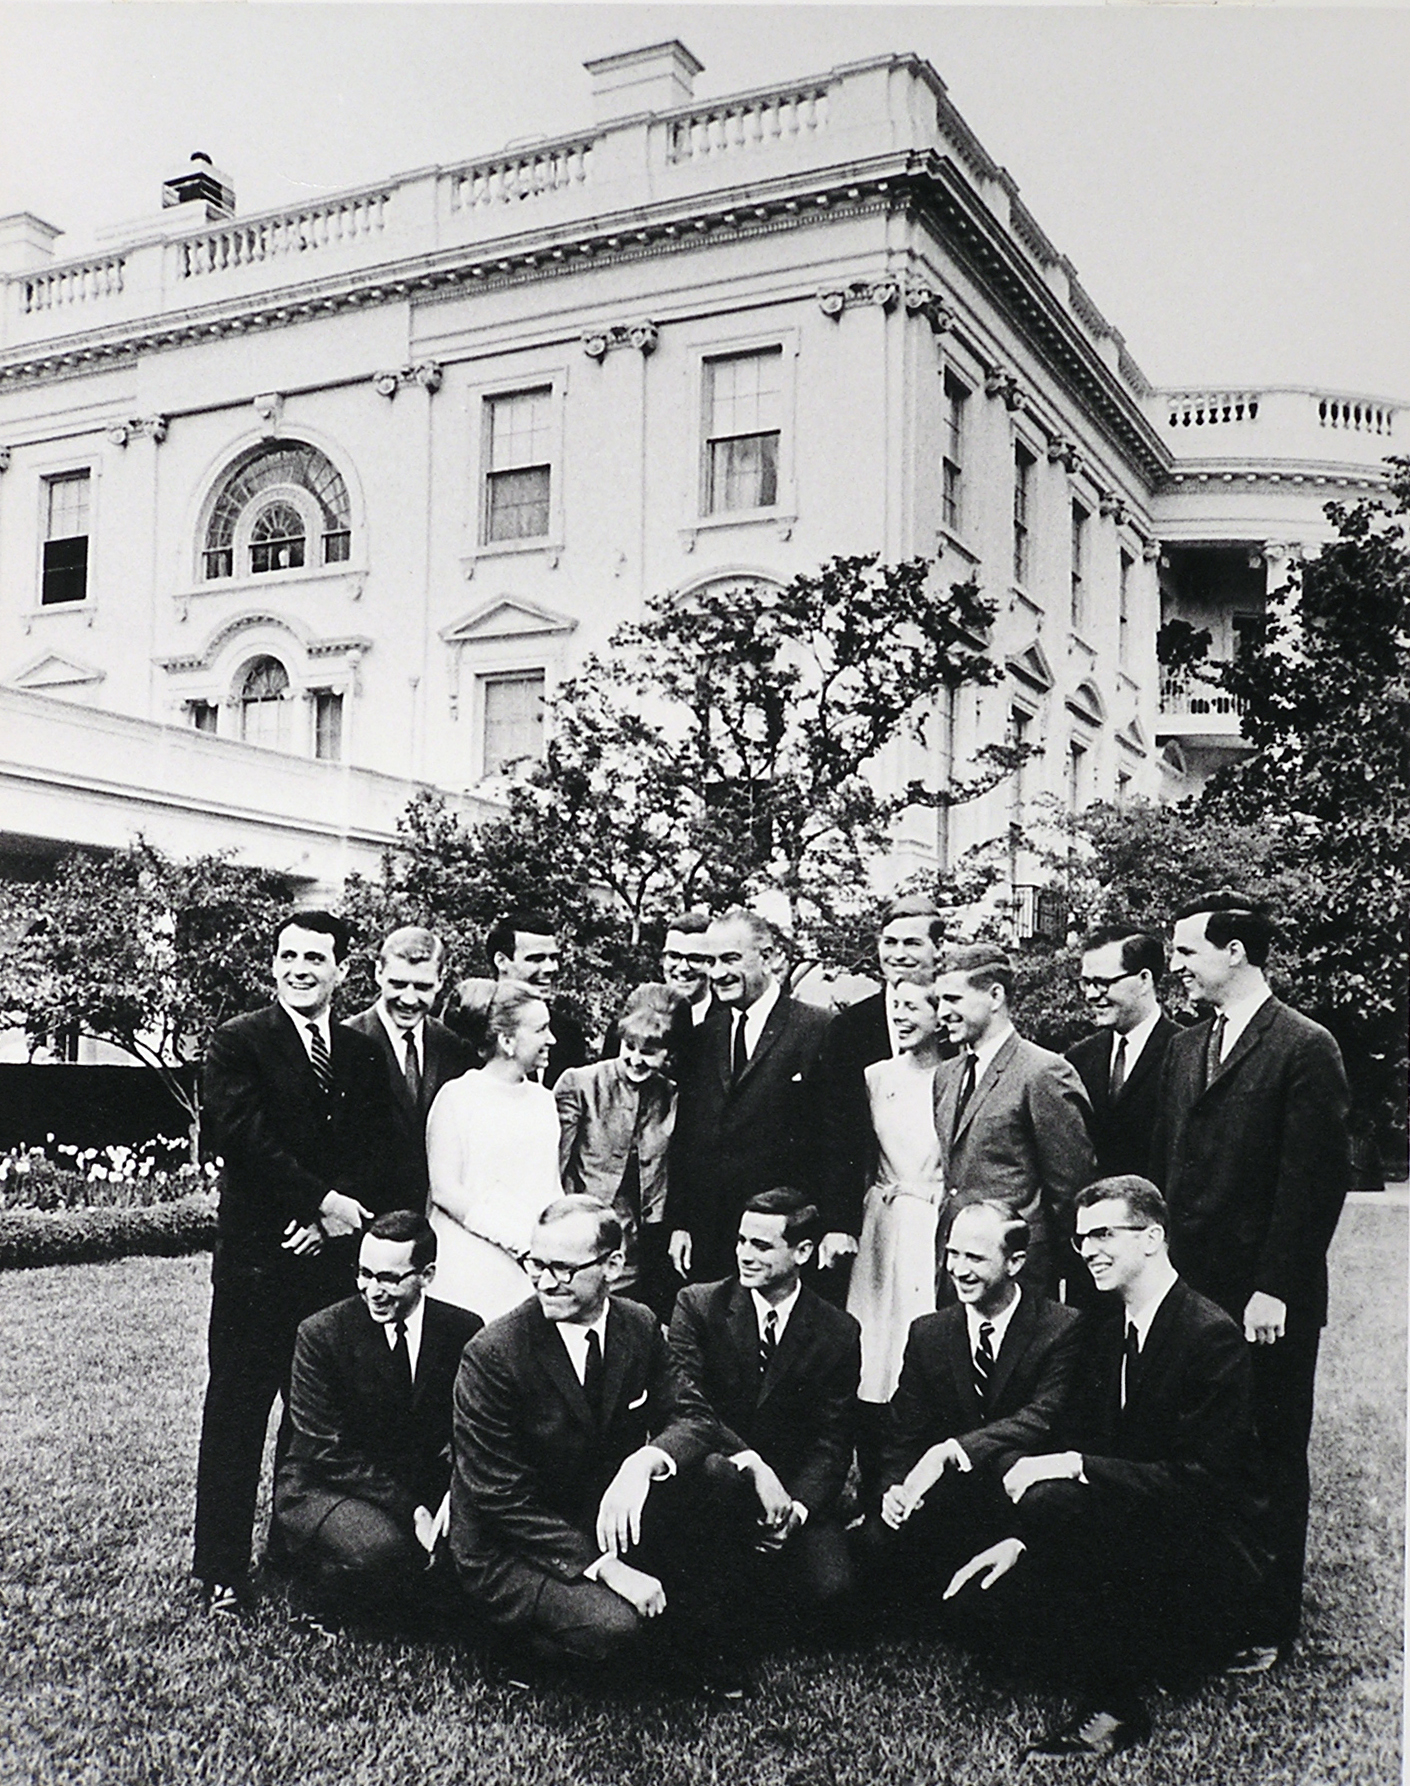 The 1967-1968 class of White House Fellows poses with President Lyndon B. Johnson